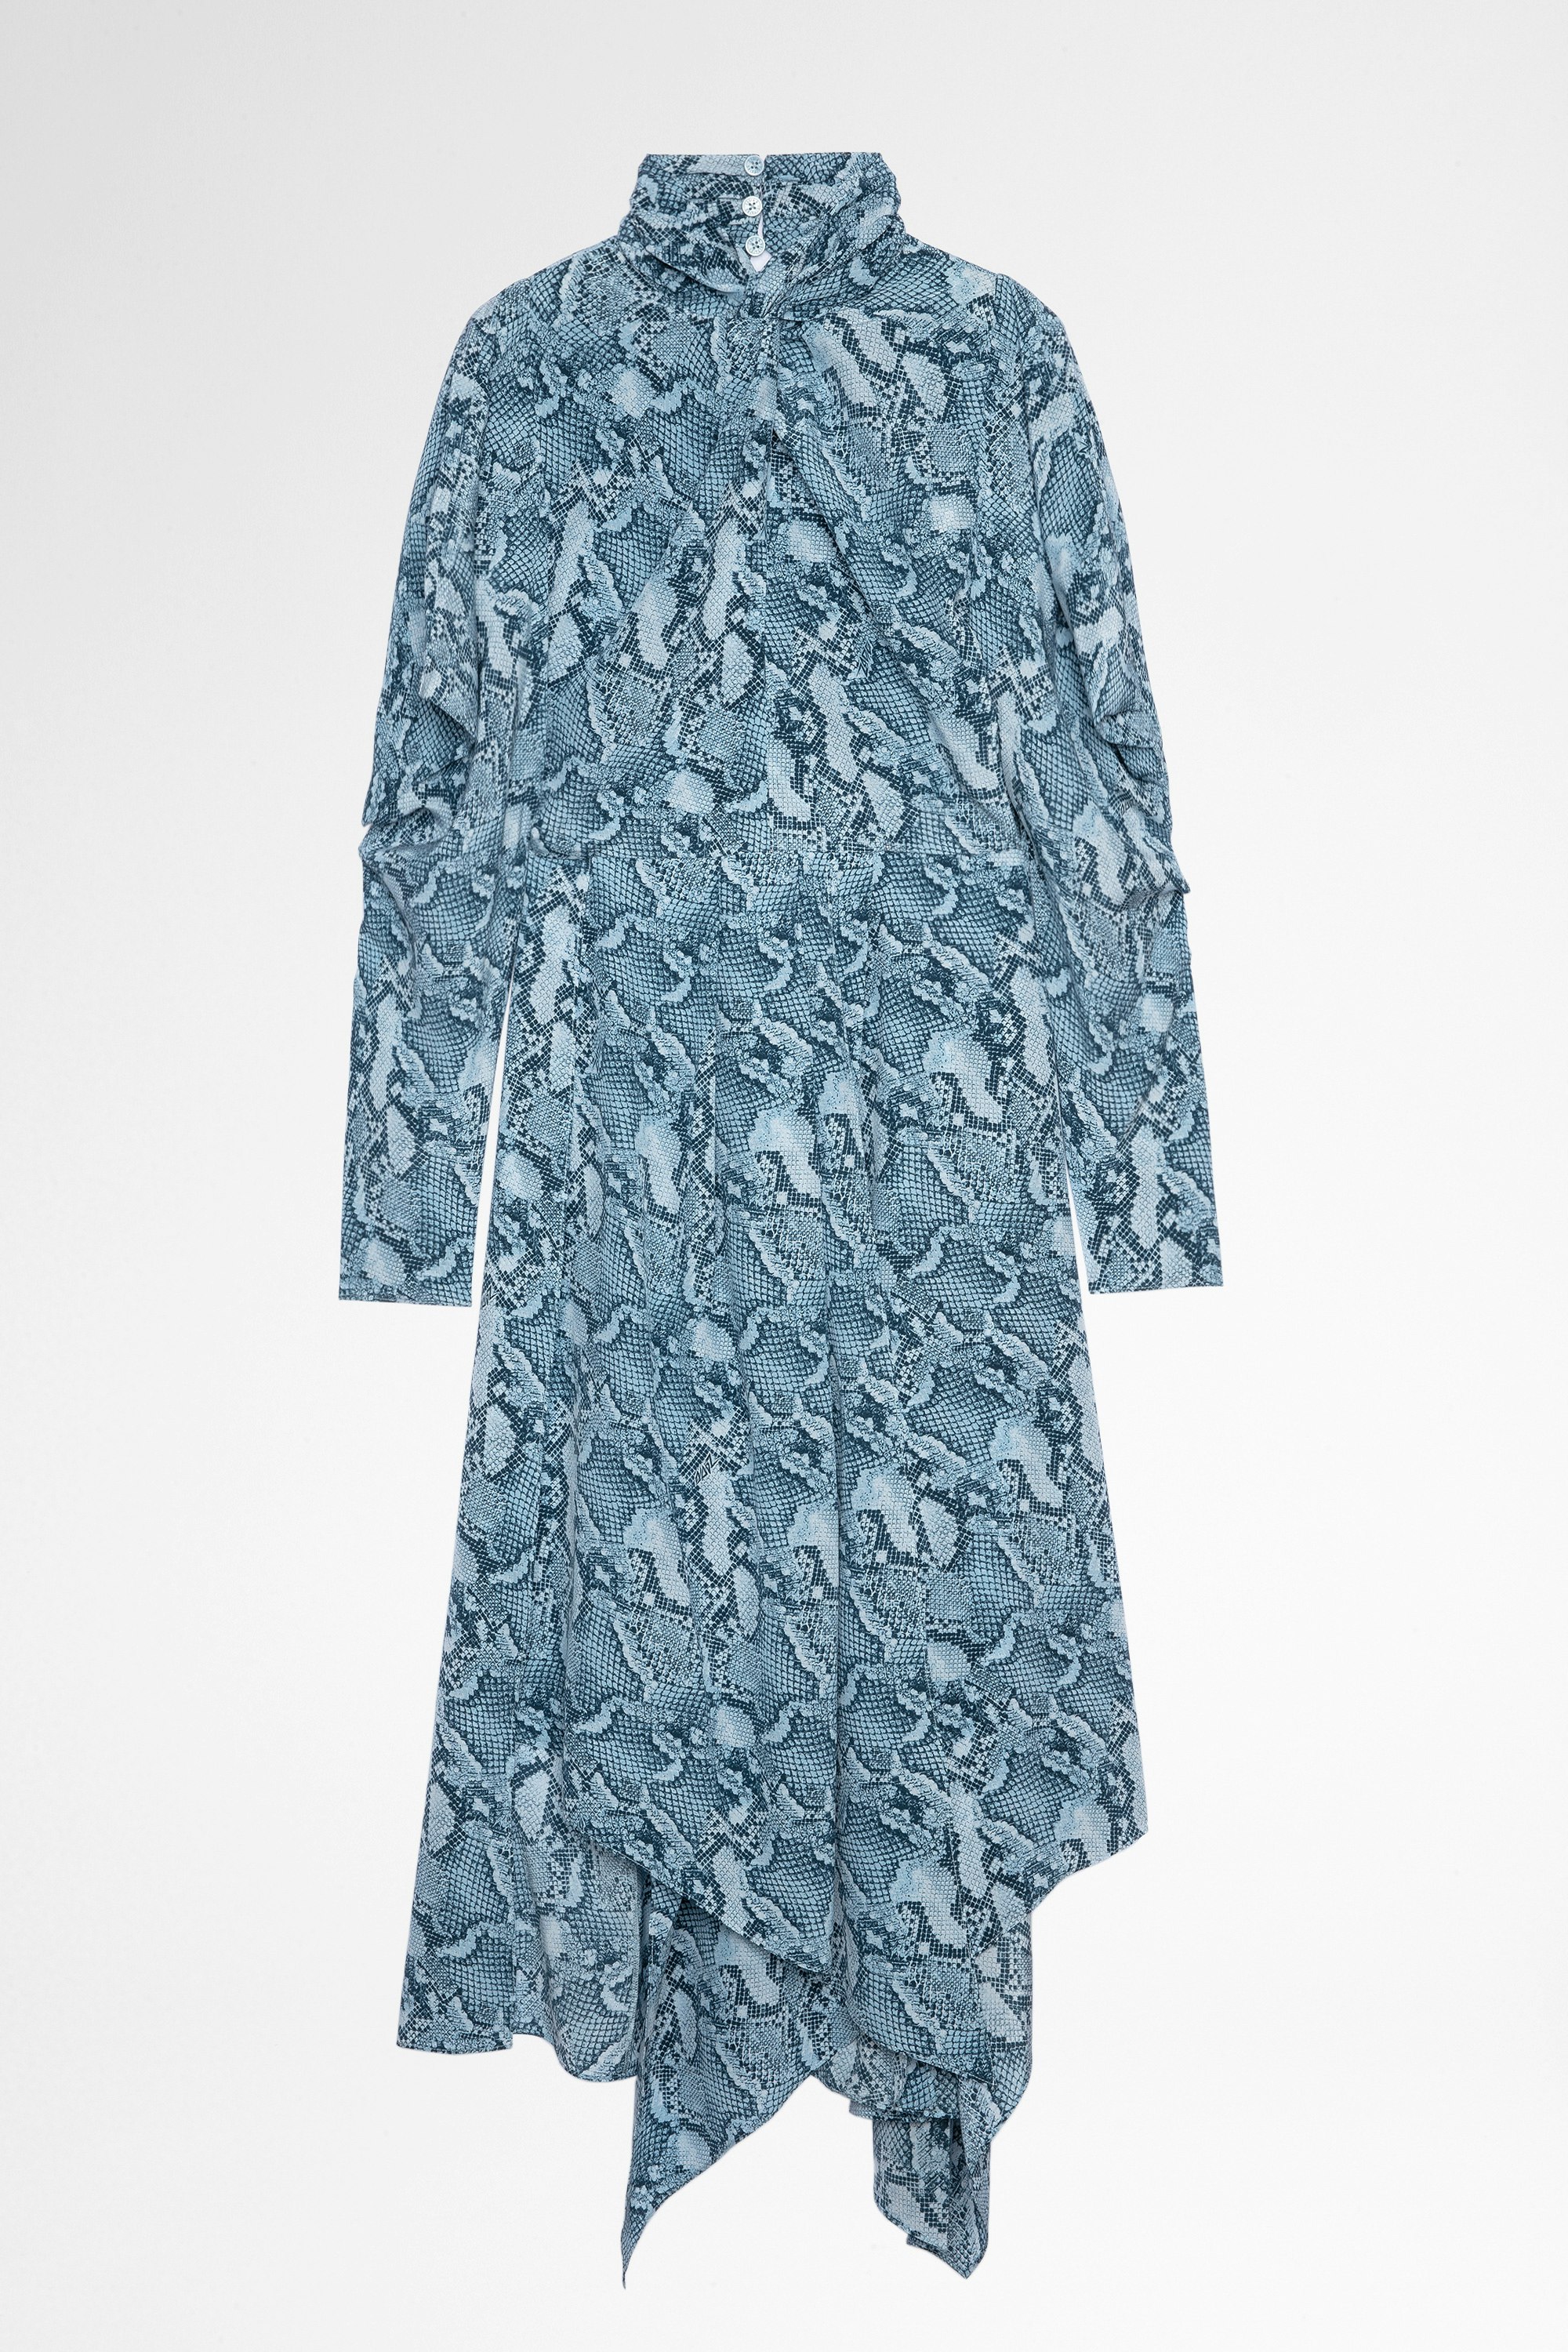 Roy シルク ドレス Women's asymmetrical dress in silk with snake print